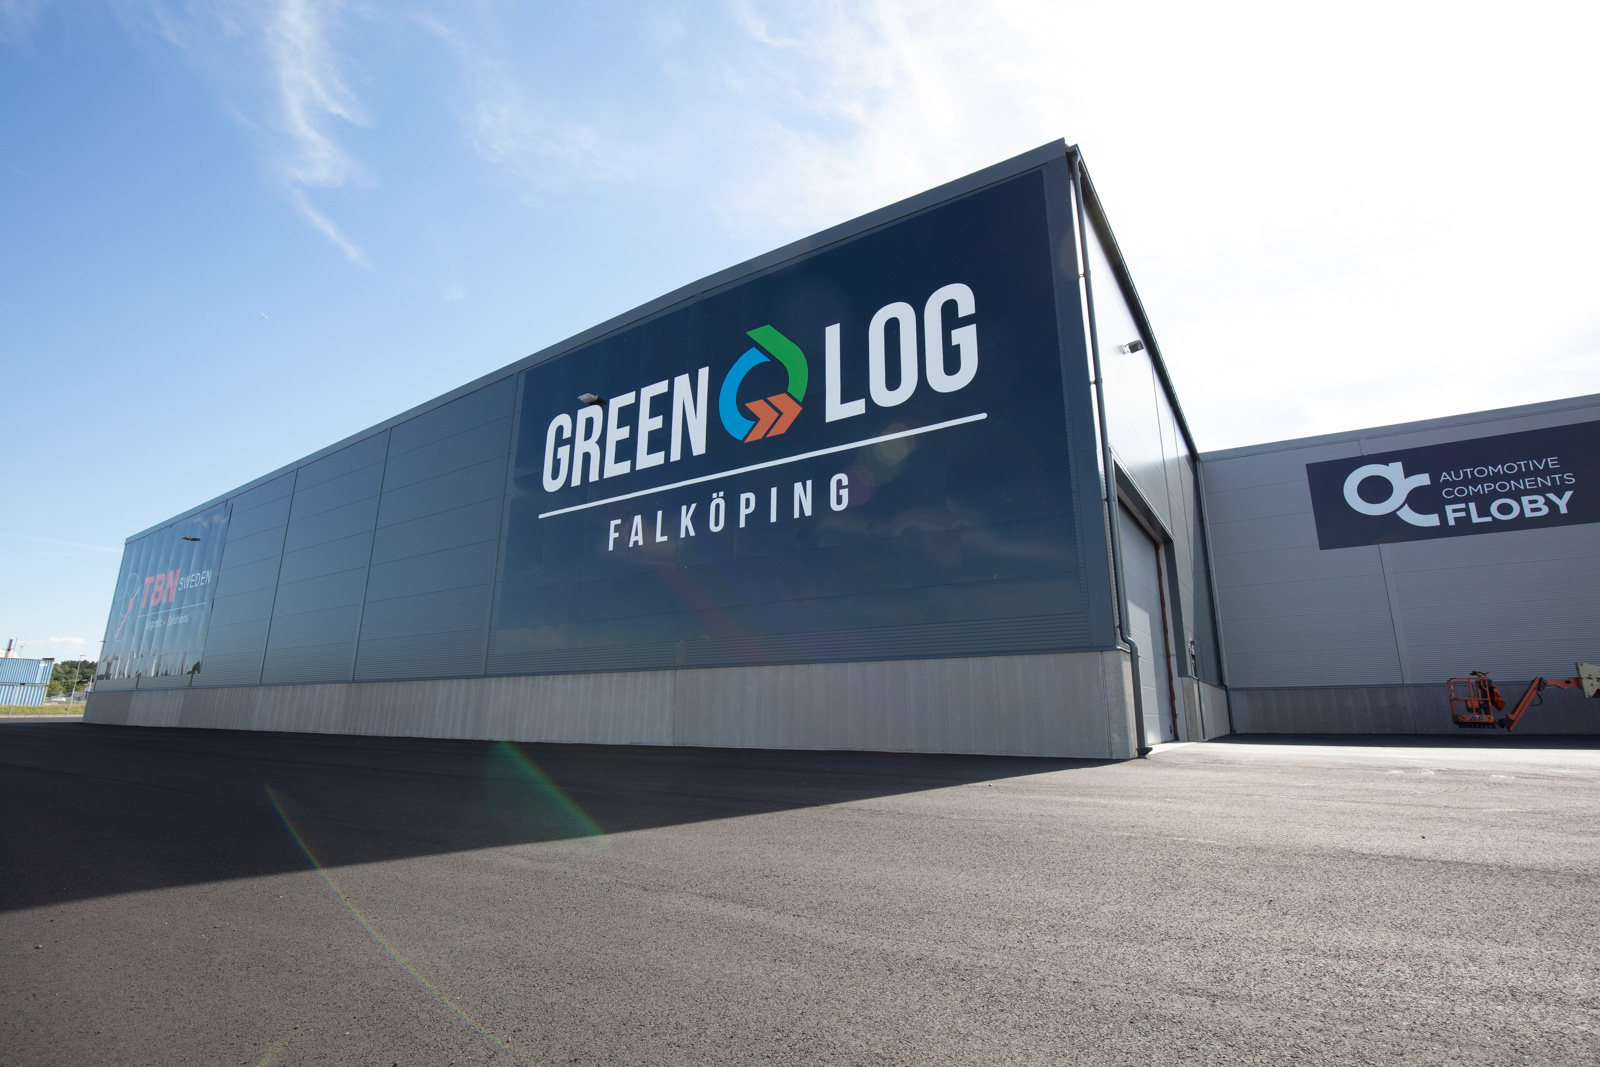 Greenlog, logistikcenter